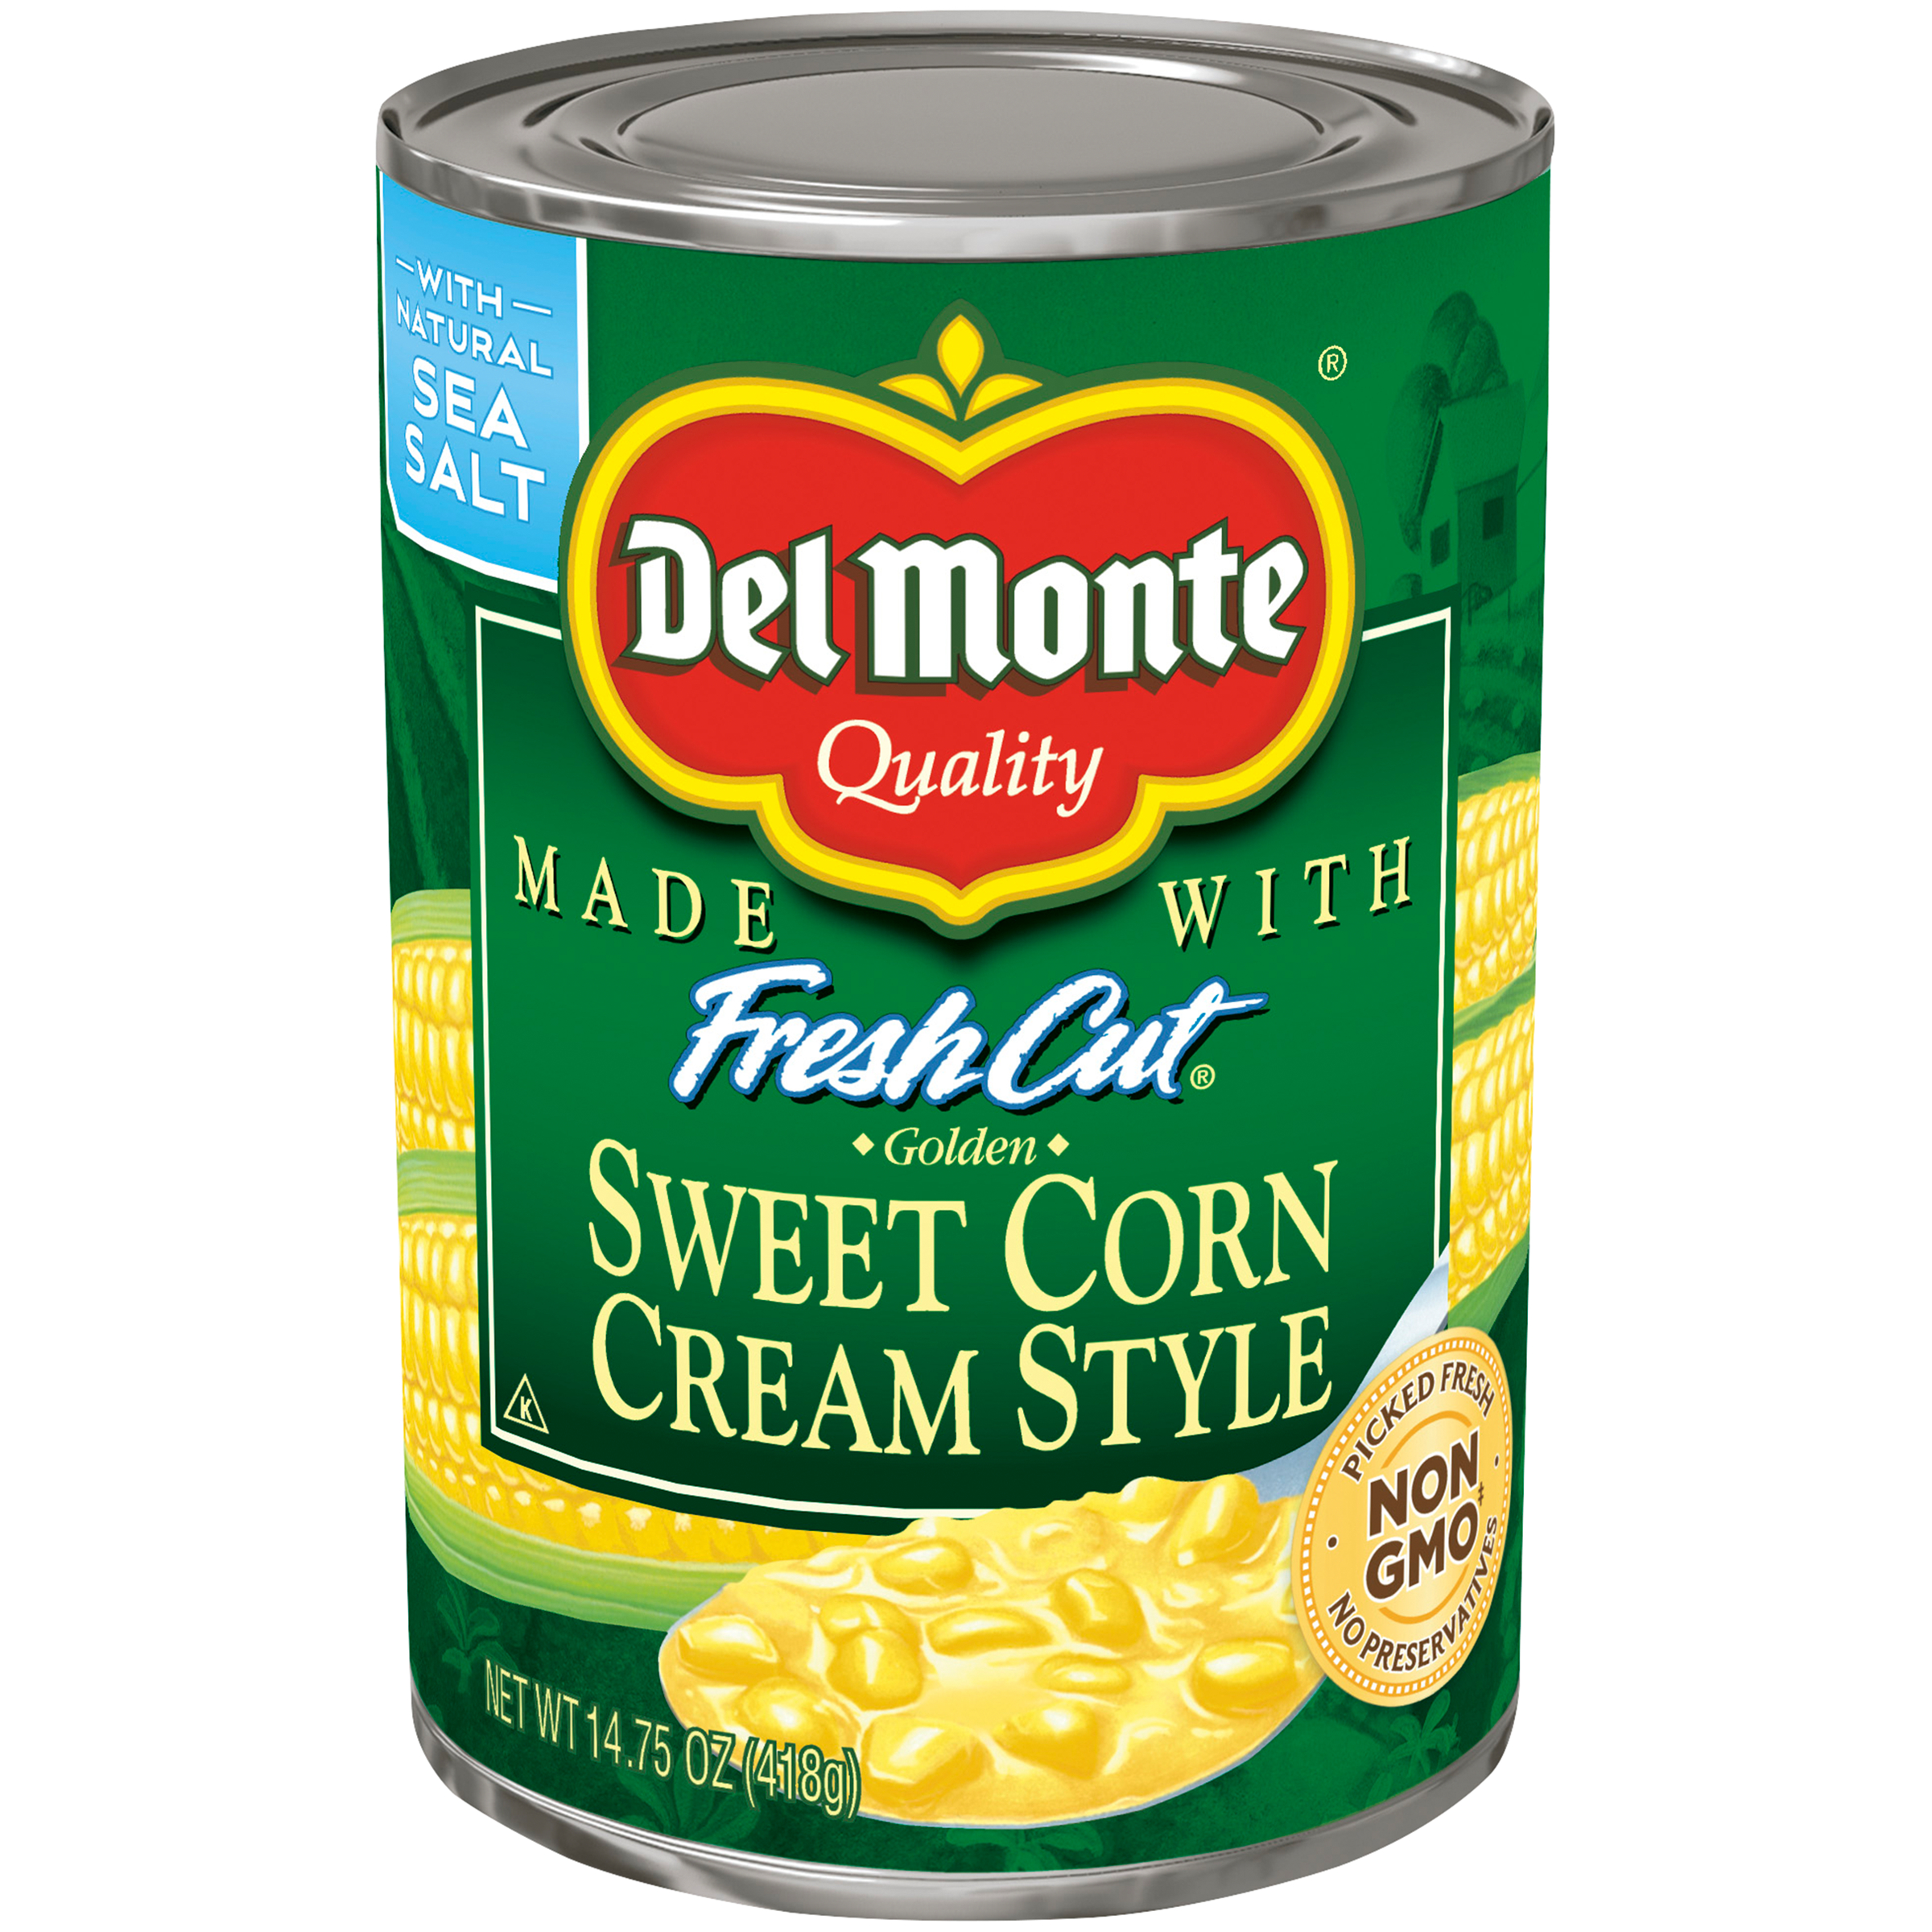 Del Monte Fresh Cut Sweet Corn Cream Style, Golden, 14.75 oz (418 g)